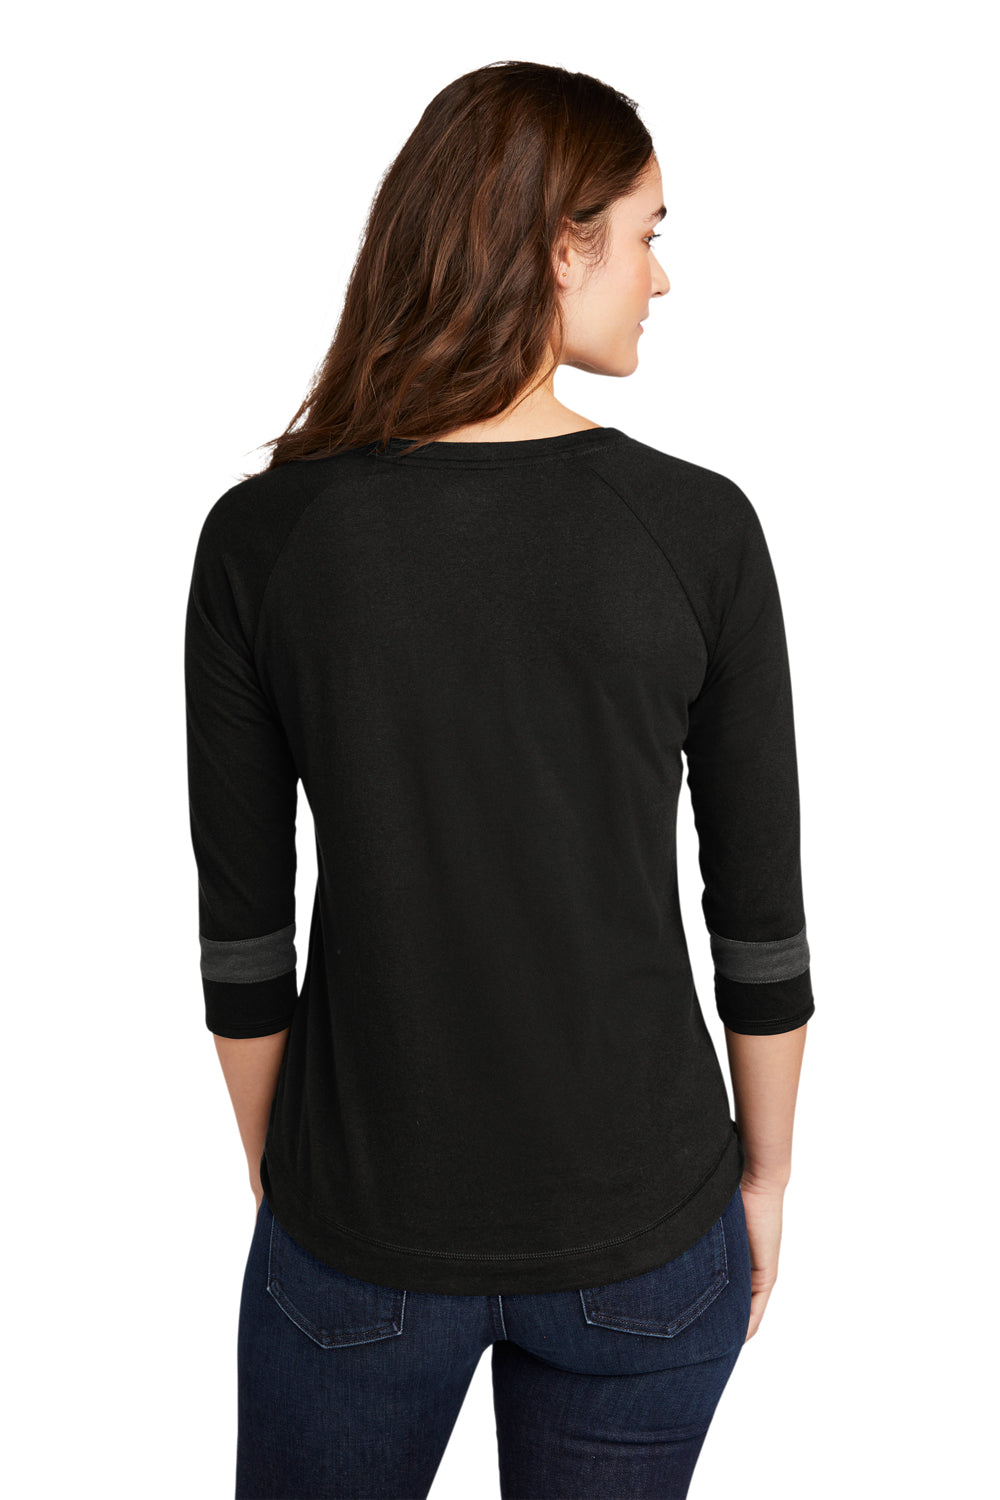 New Era Womens 3/4 Sleeve Crewneck T-Shirt Black/Graphite Grey Side